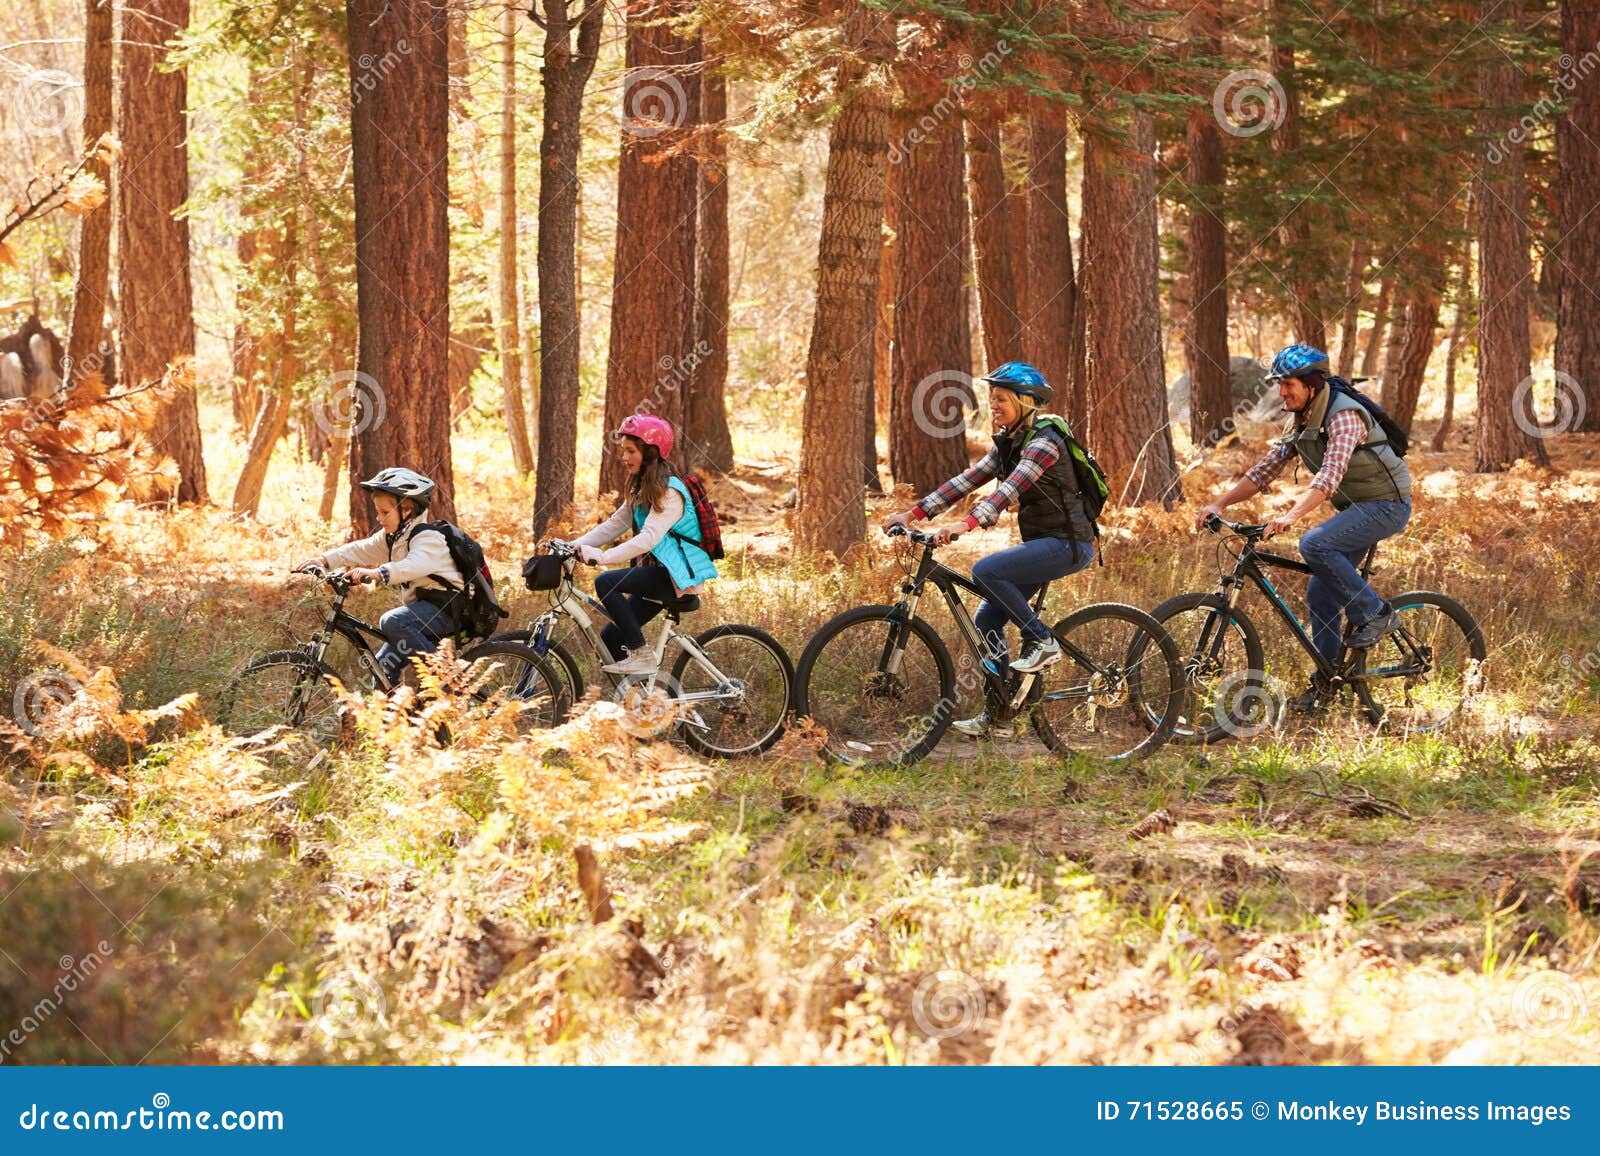 family mountain biking on forest trail, big bear, california